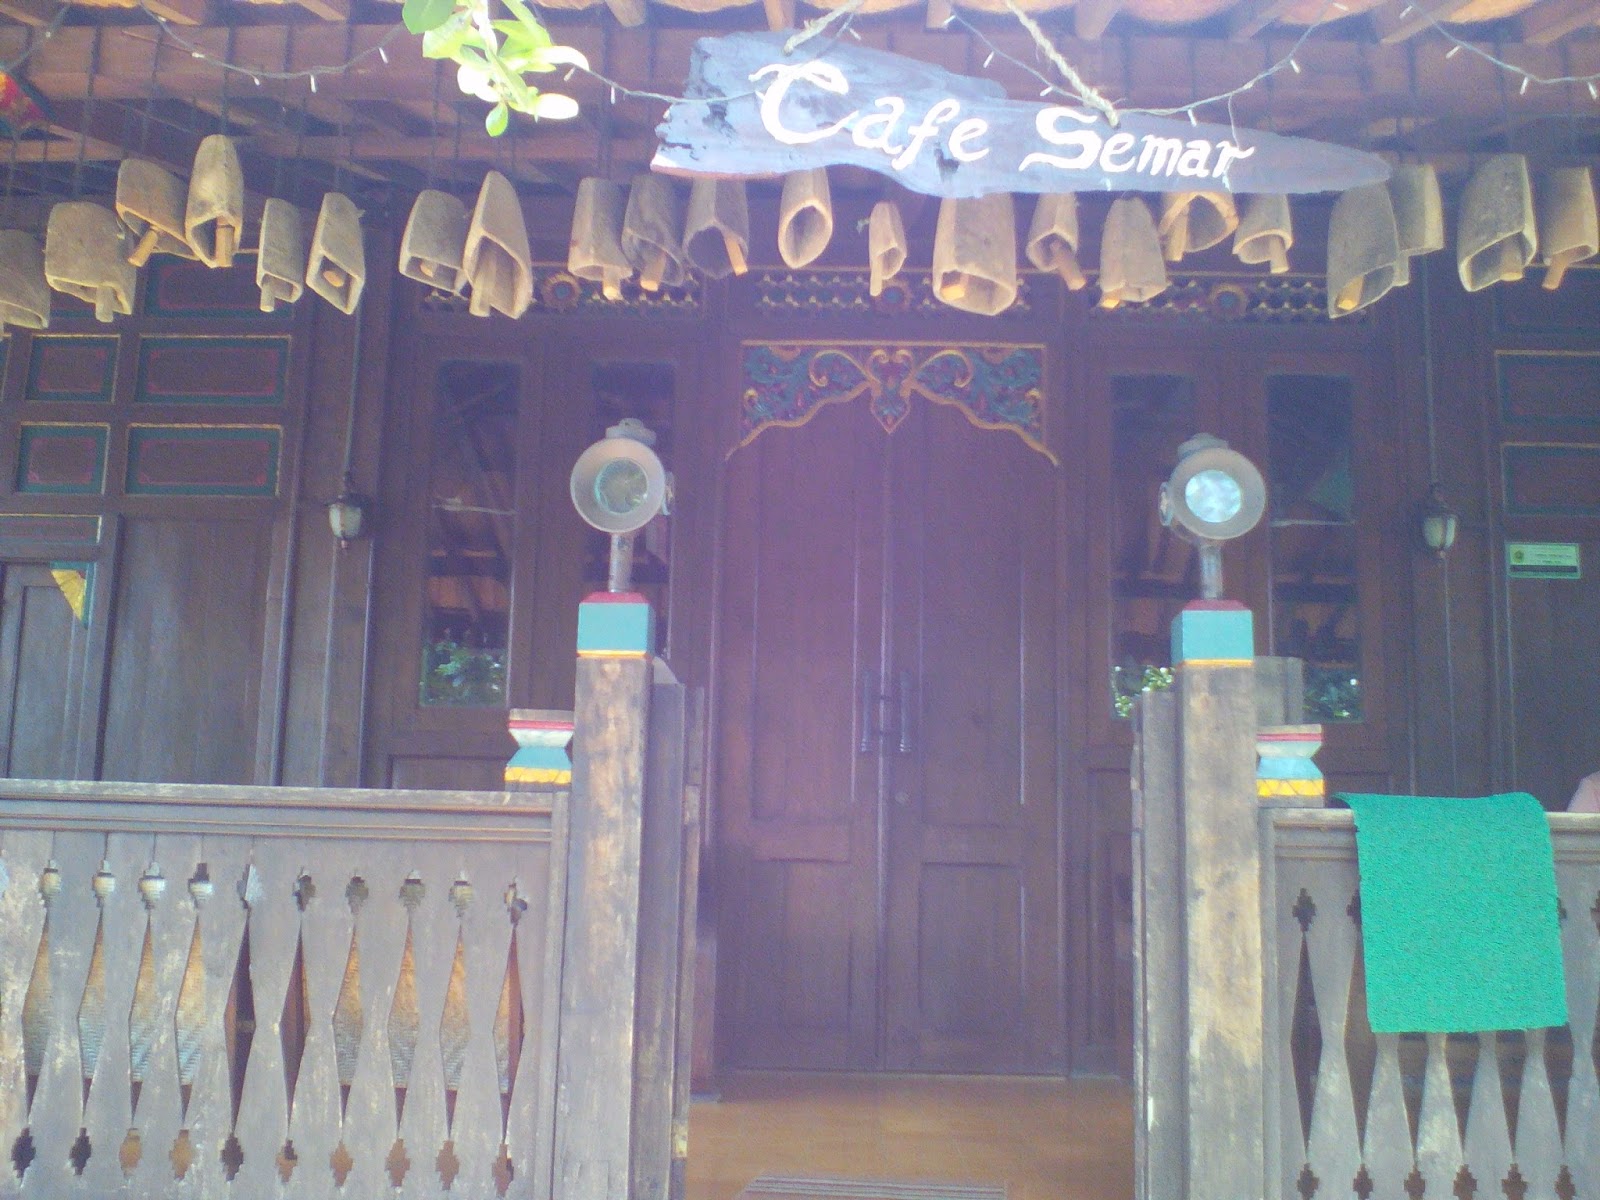 Agus Supriyanto's Blog: Kampoeng Wisata Rumah Joglo Bogor